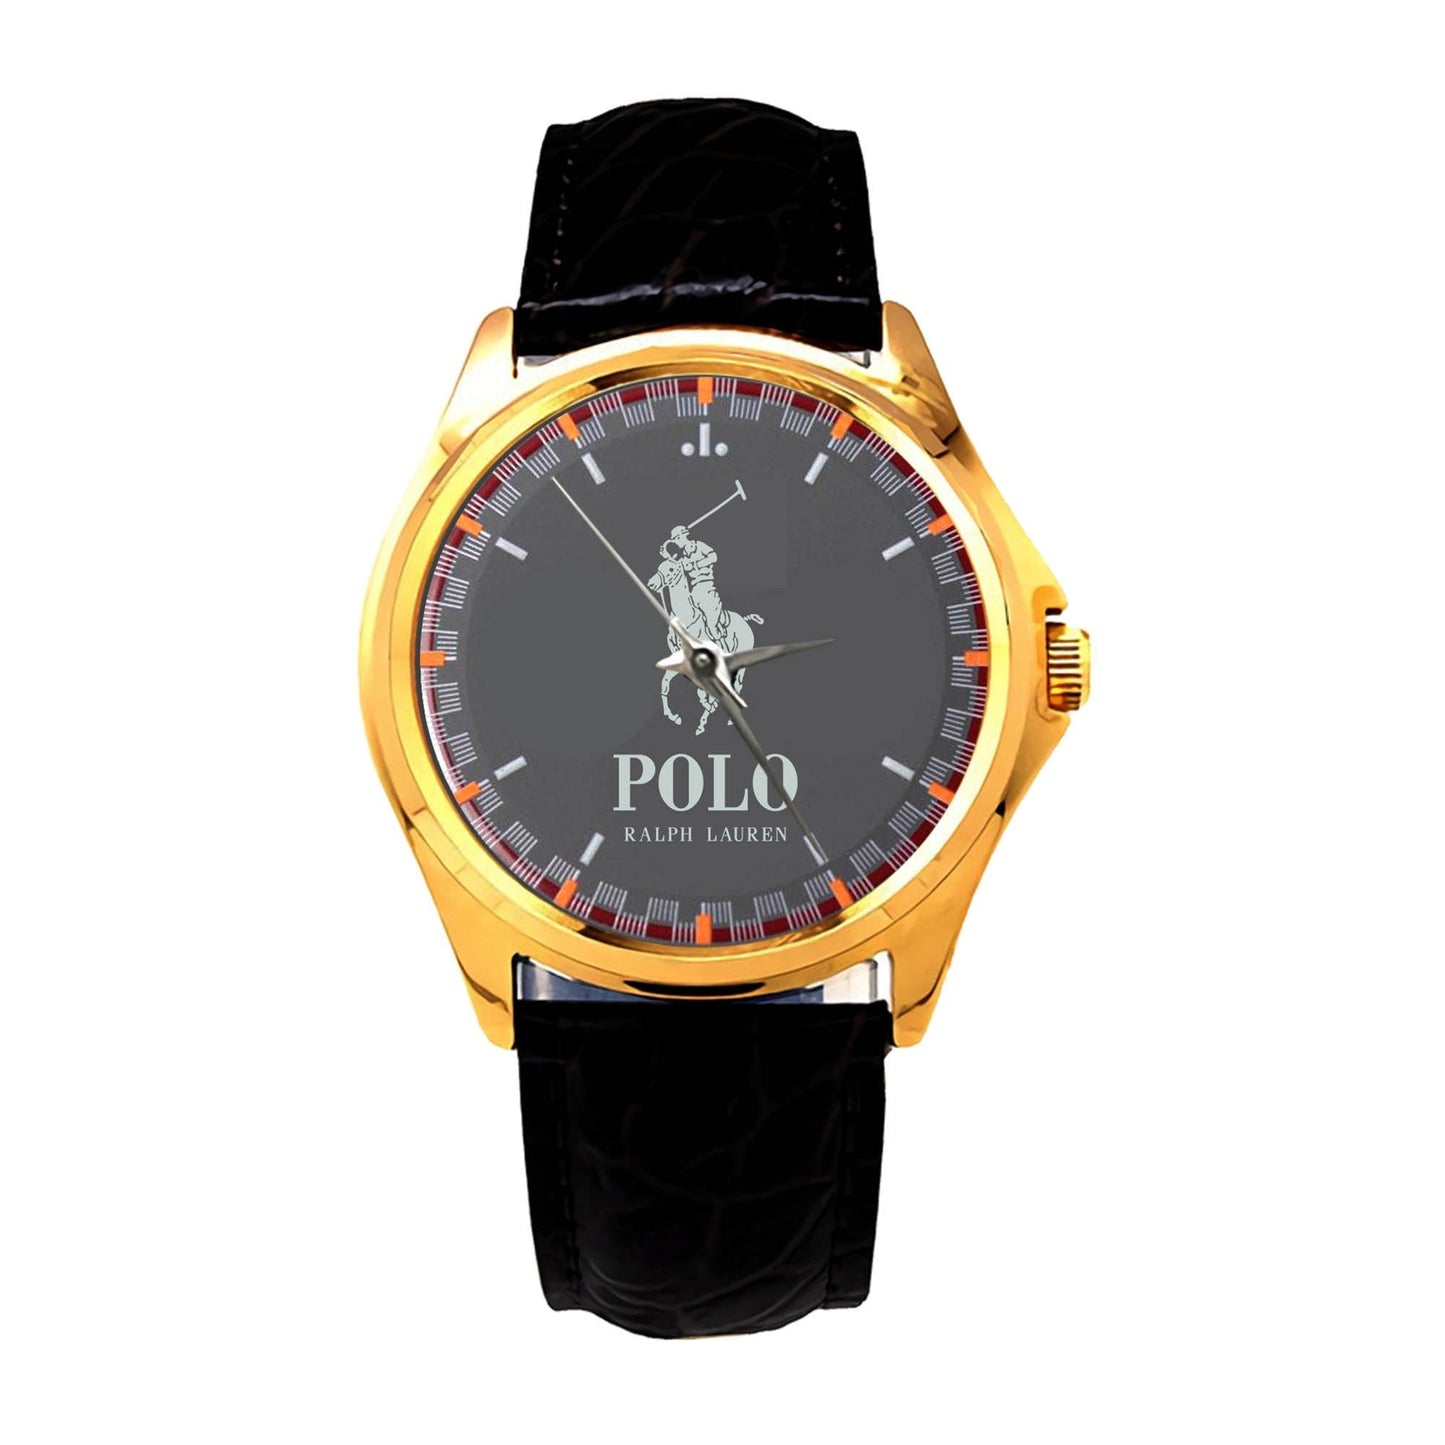 Polo Ralph Lauren Watches KP340